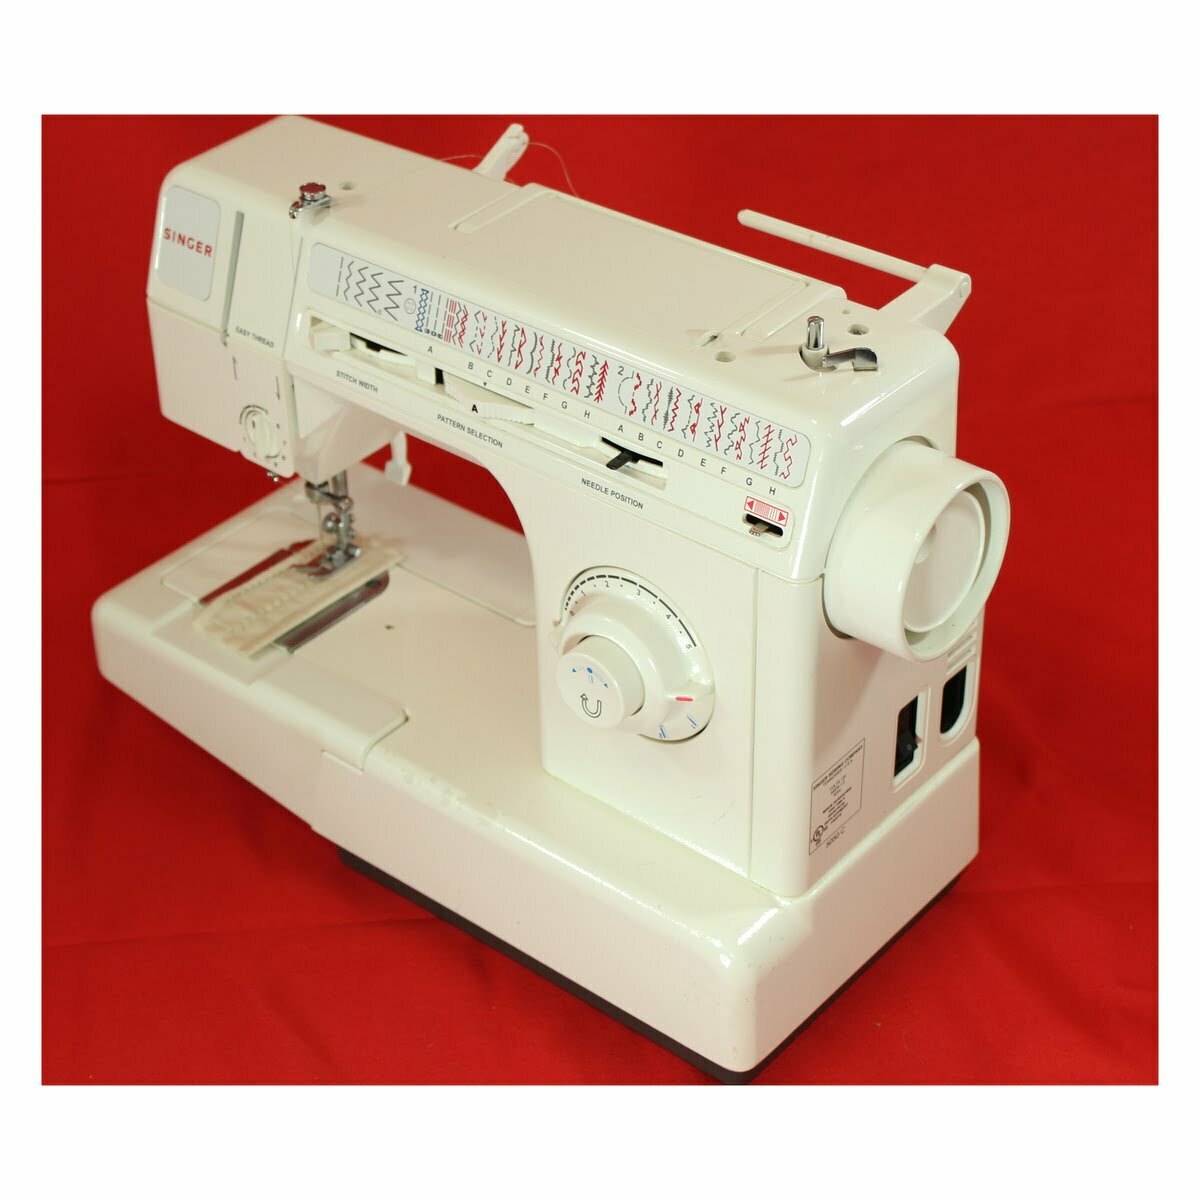 Singer Sewing Machine Repair Service